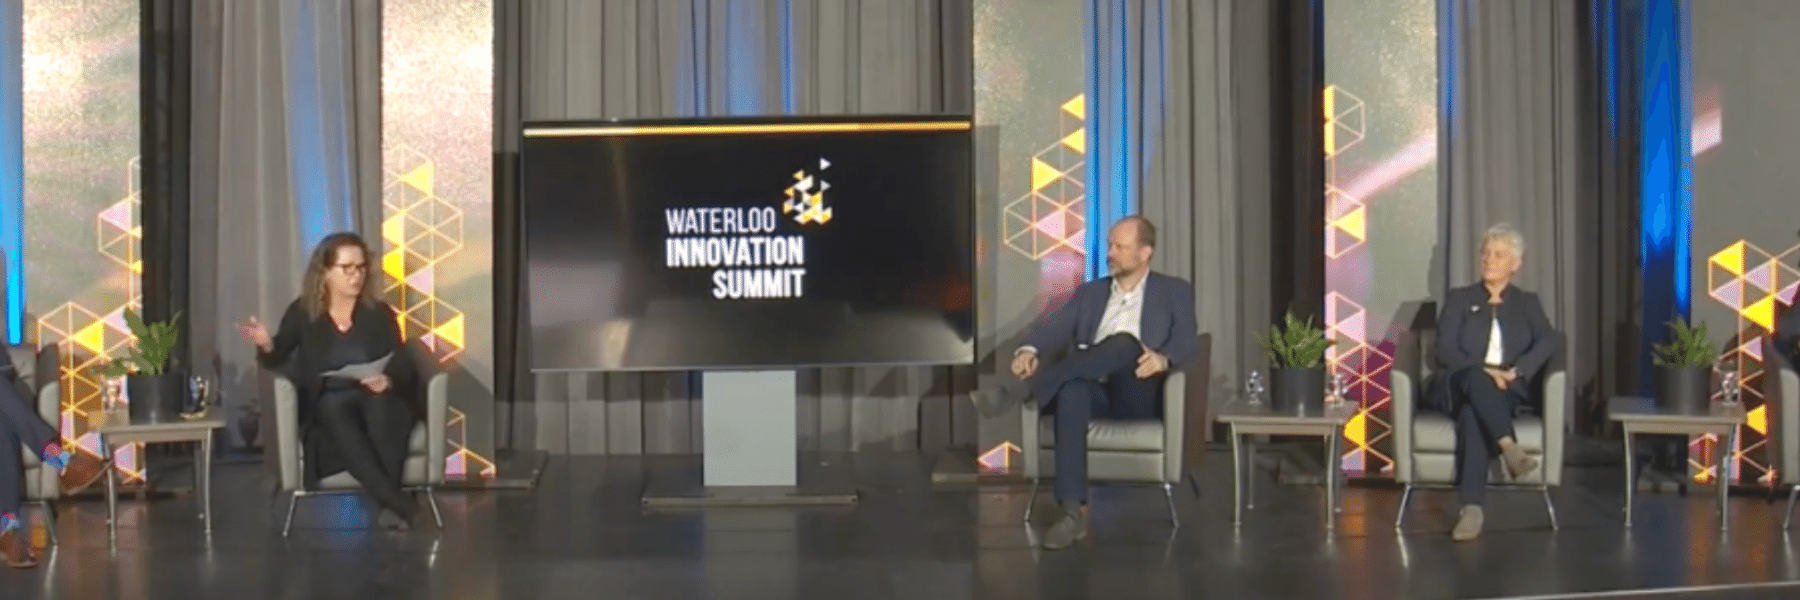 Expert panel at the Waterloo Innovation Summit